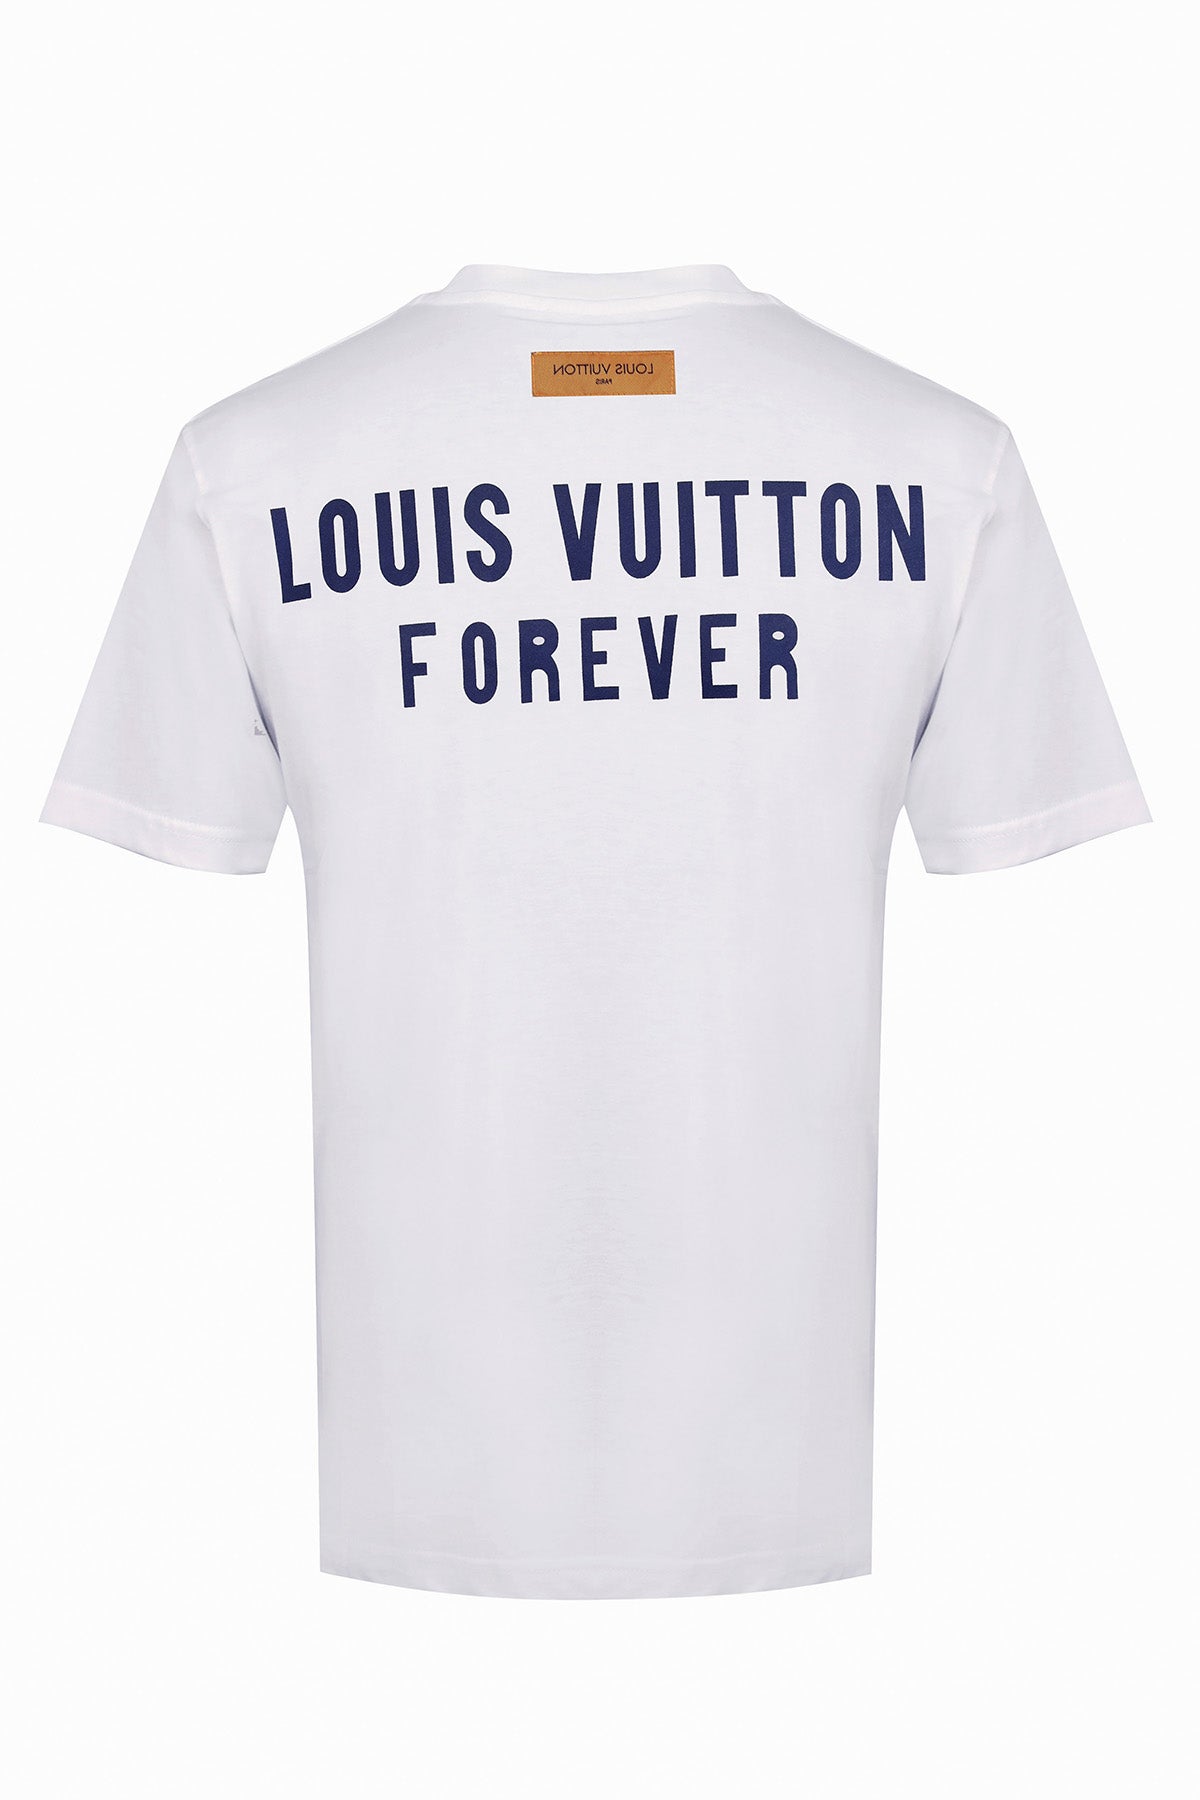 Louis Vuitton Louis Vuitton x LV forever T shirt